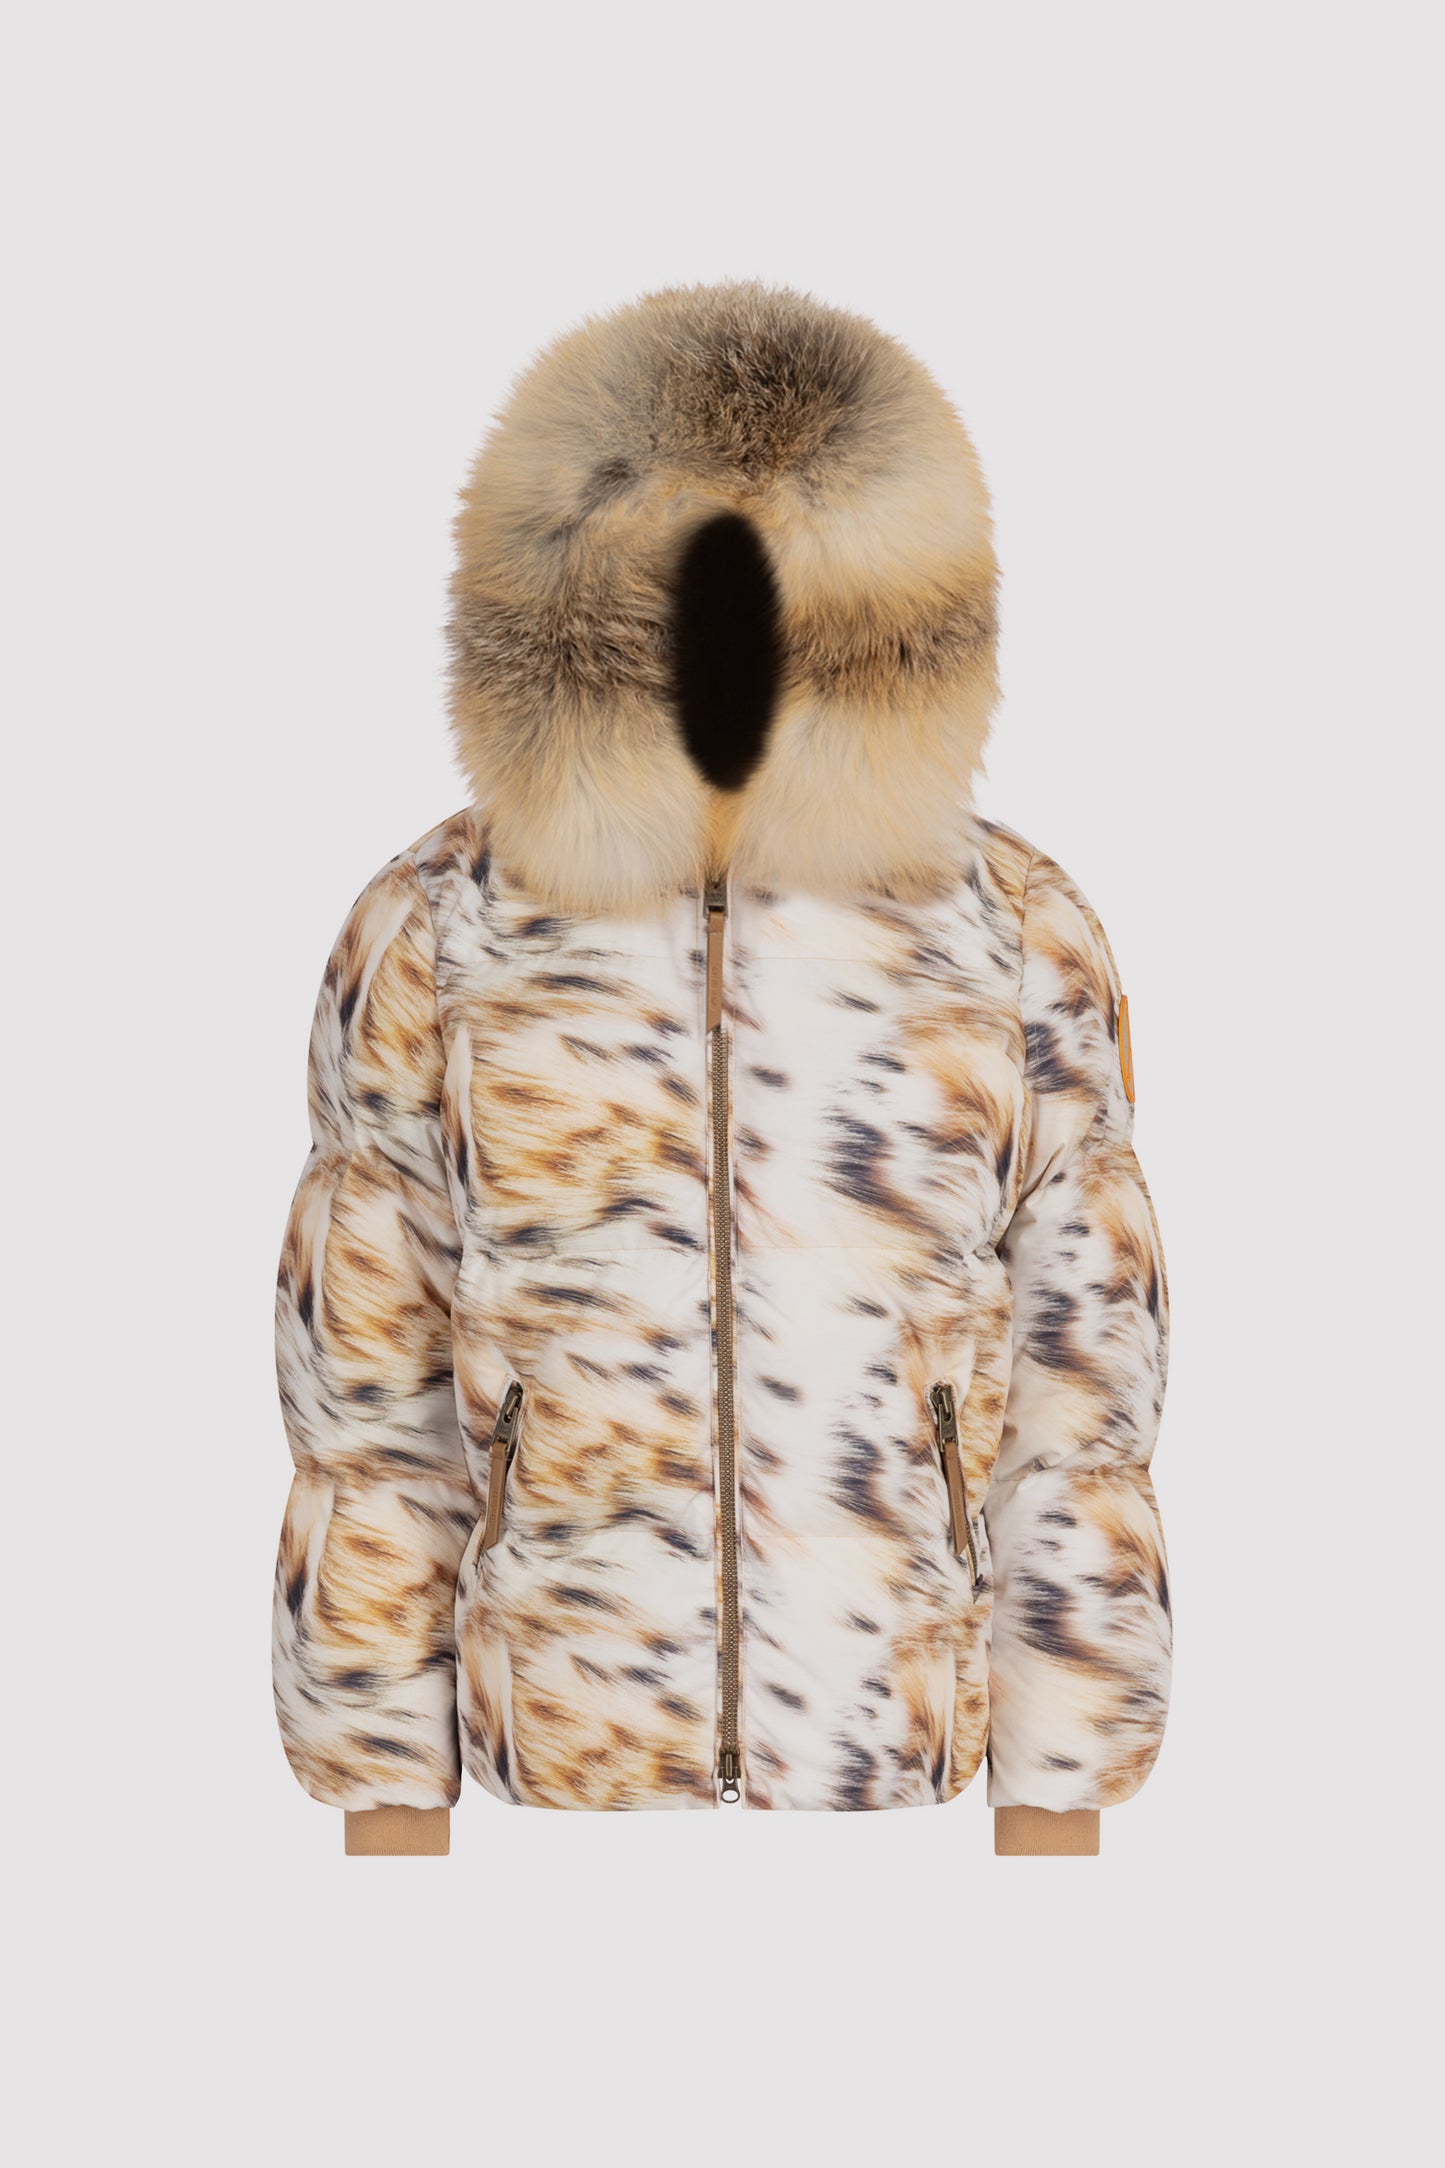 Women's Lynx Print Puffer with Fur in Lynx Camo